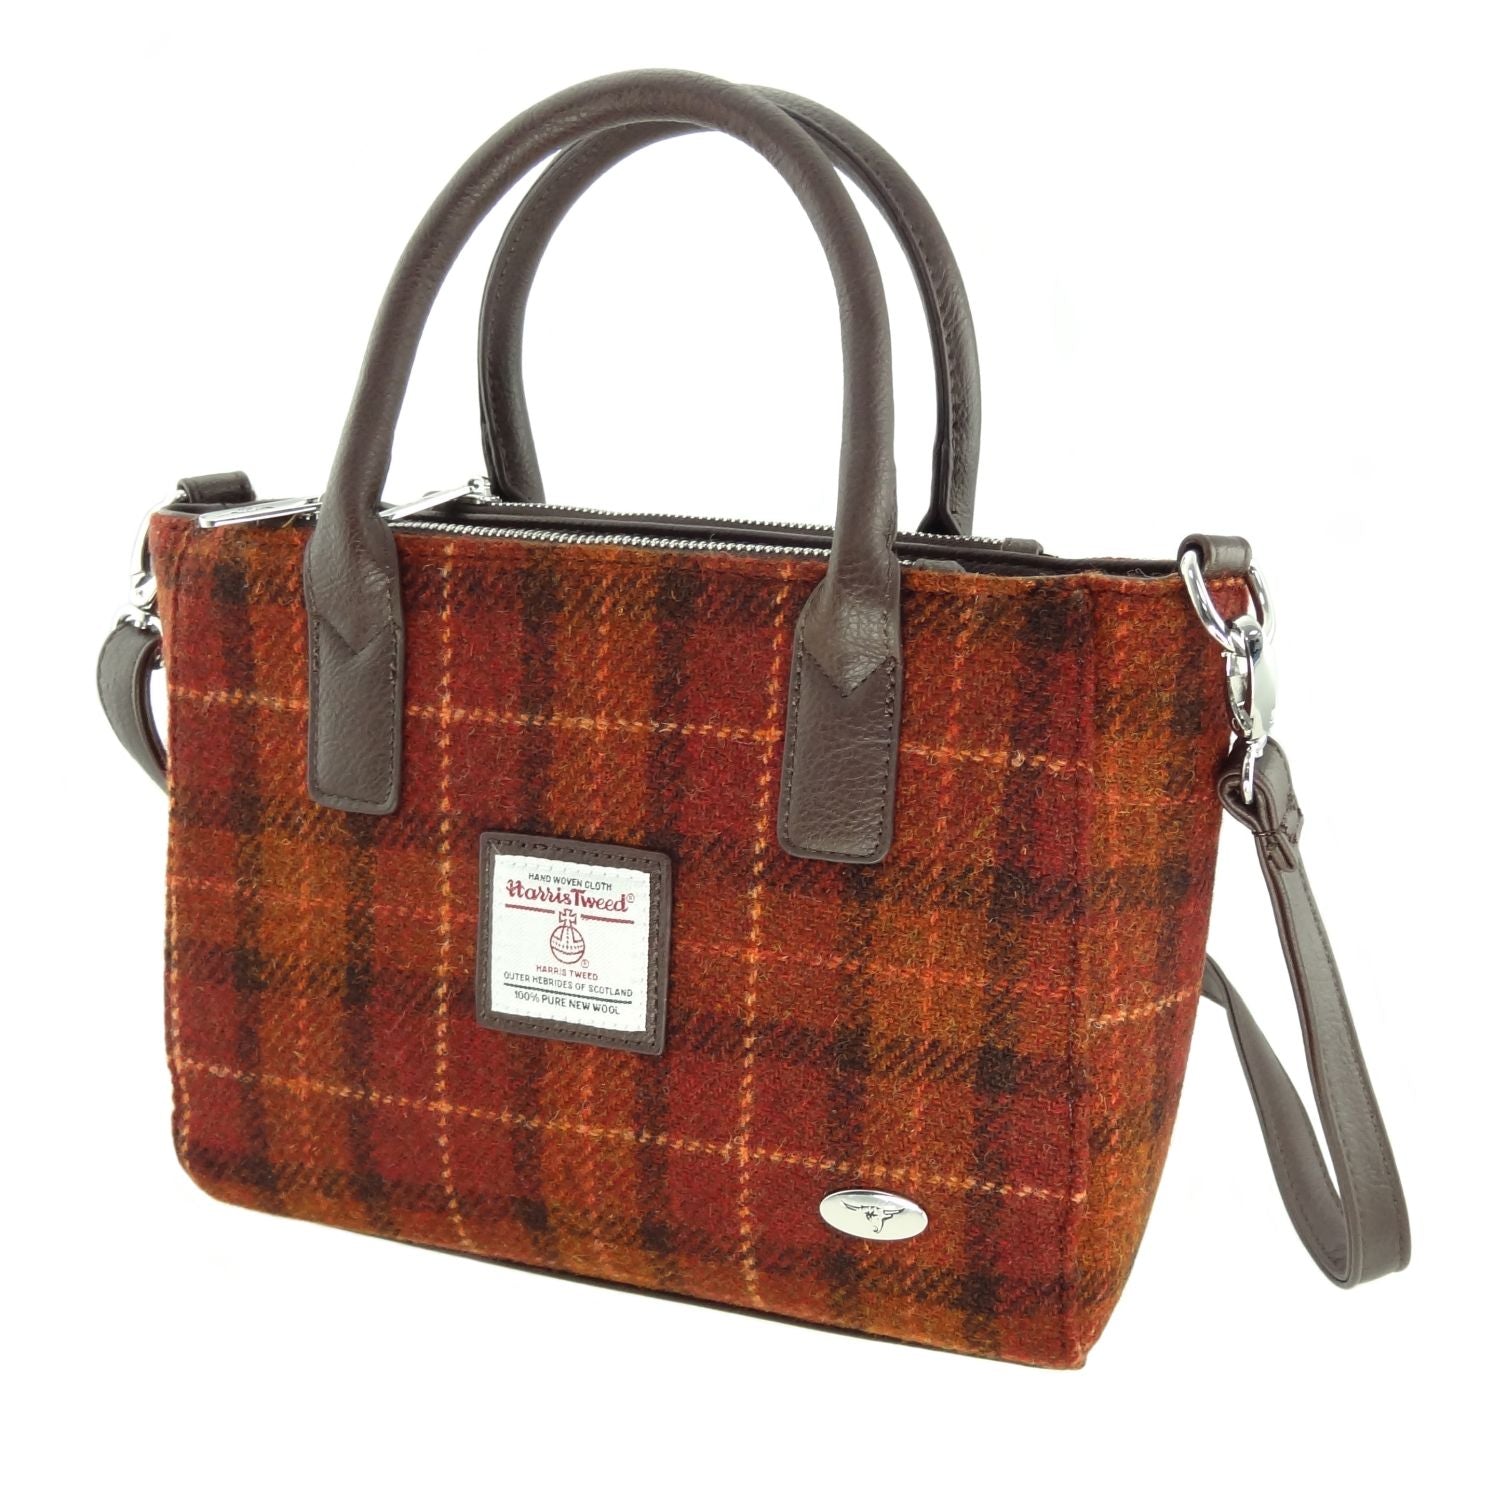 Harris Tweed Tote Bag | Scotland House, Ltd.